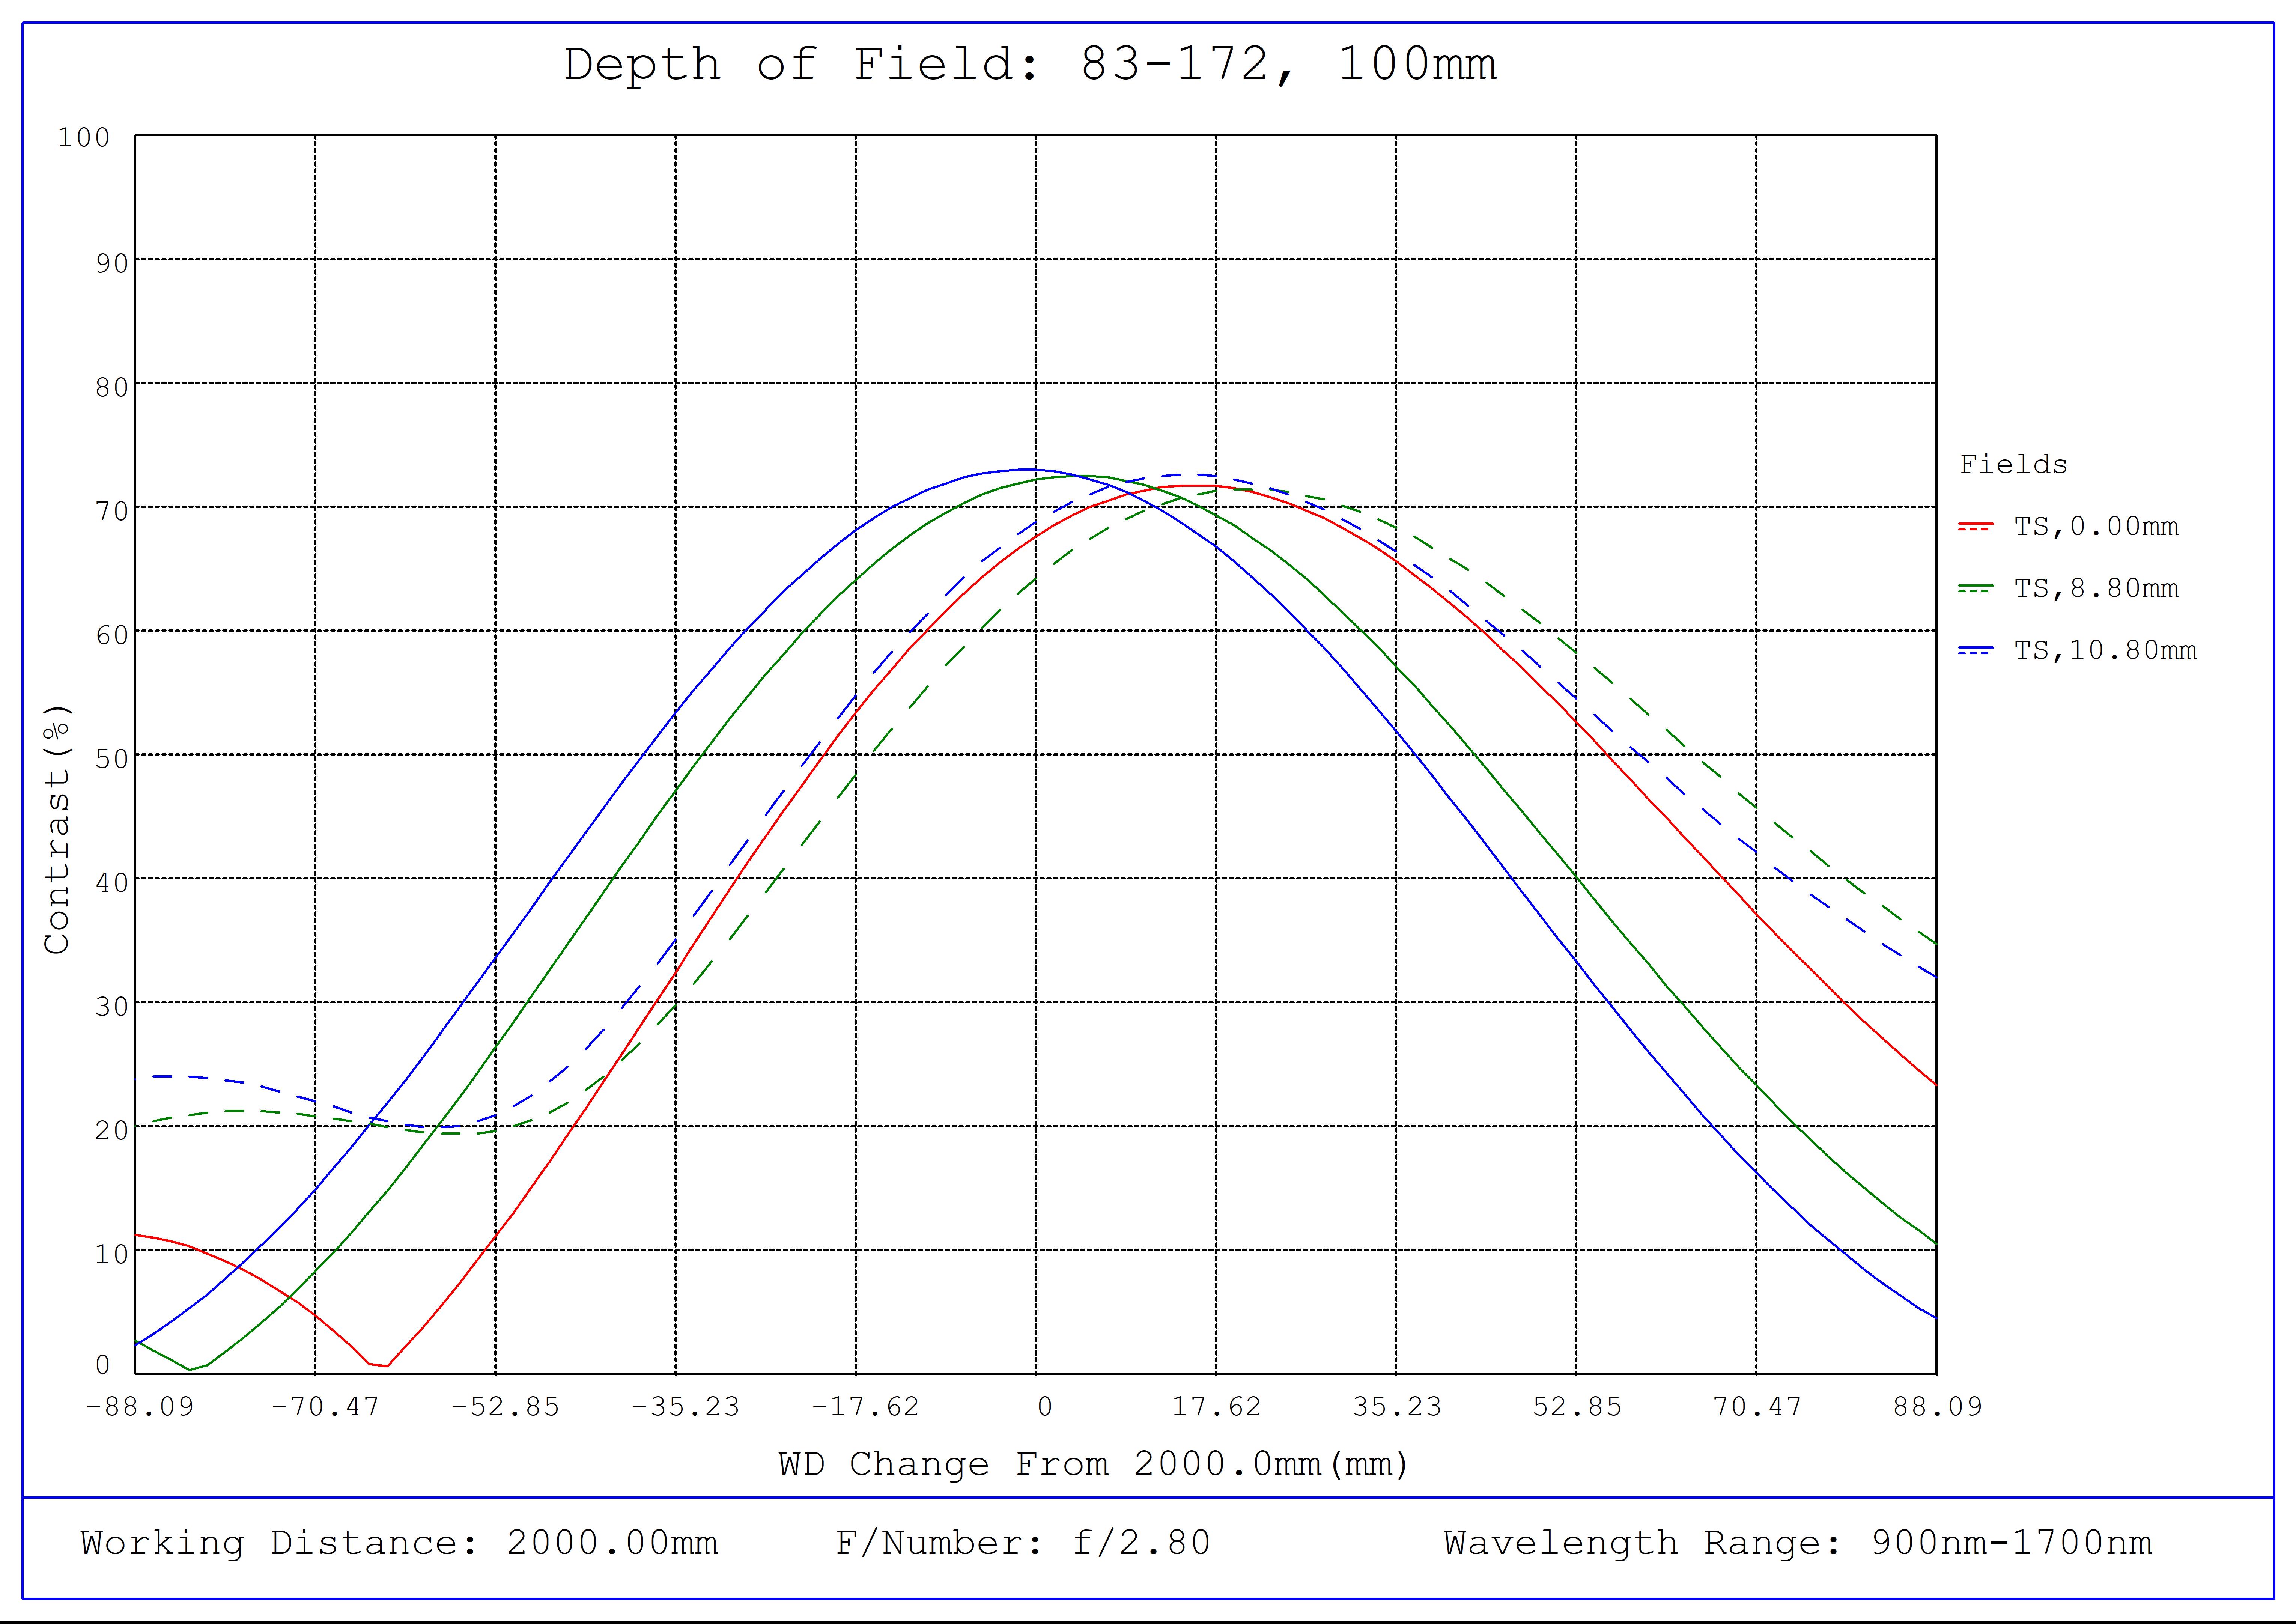 #83-172, 100mm SWIR Series Fixed Focal Length Lens, M42 x 1.0, Depth of Field Plot, 2000mm Working Distance, f2.8